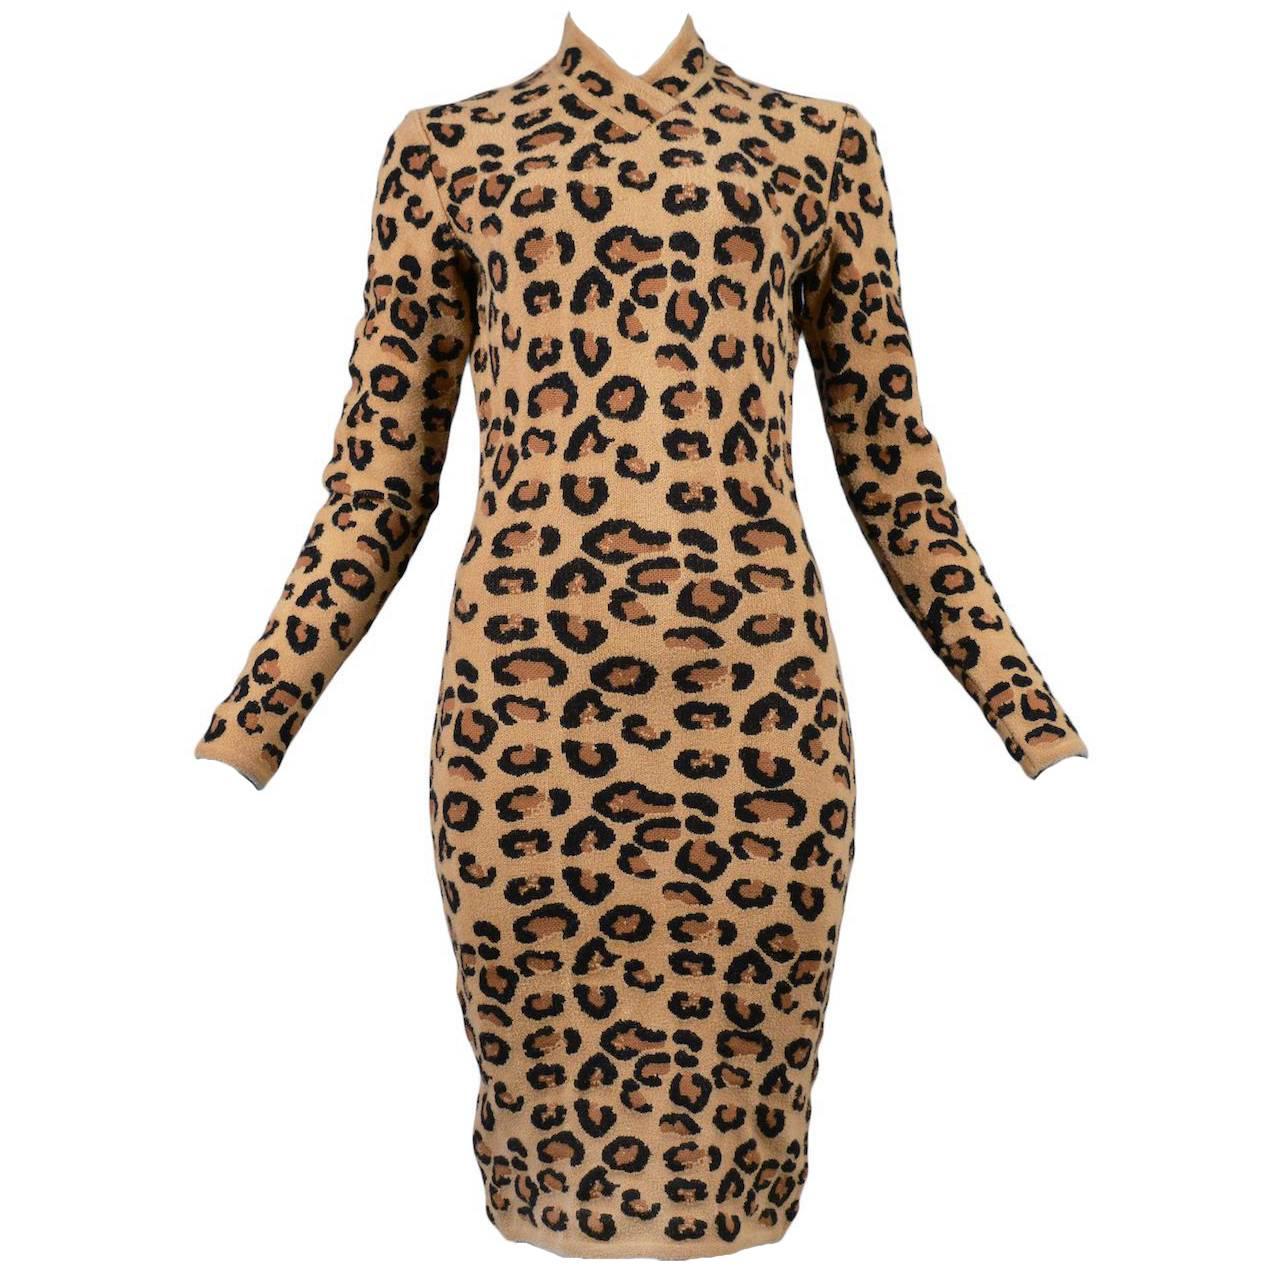 Iconic Alaia Leopard Dress 1991-1992